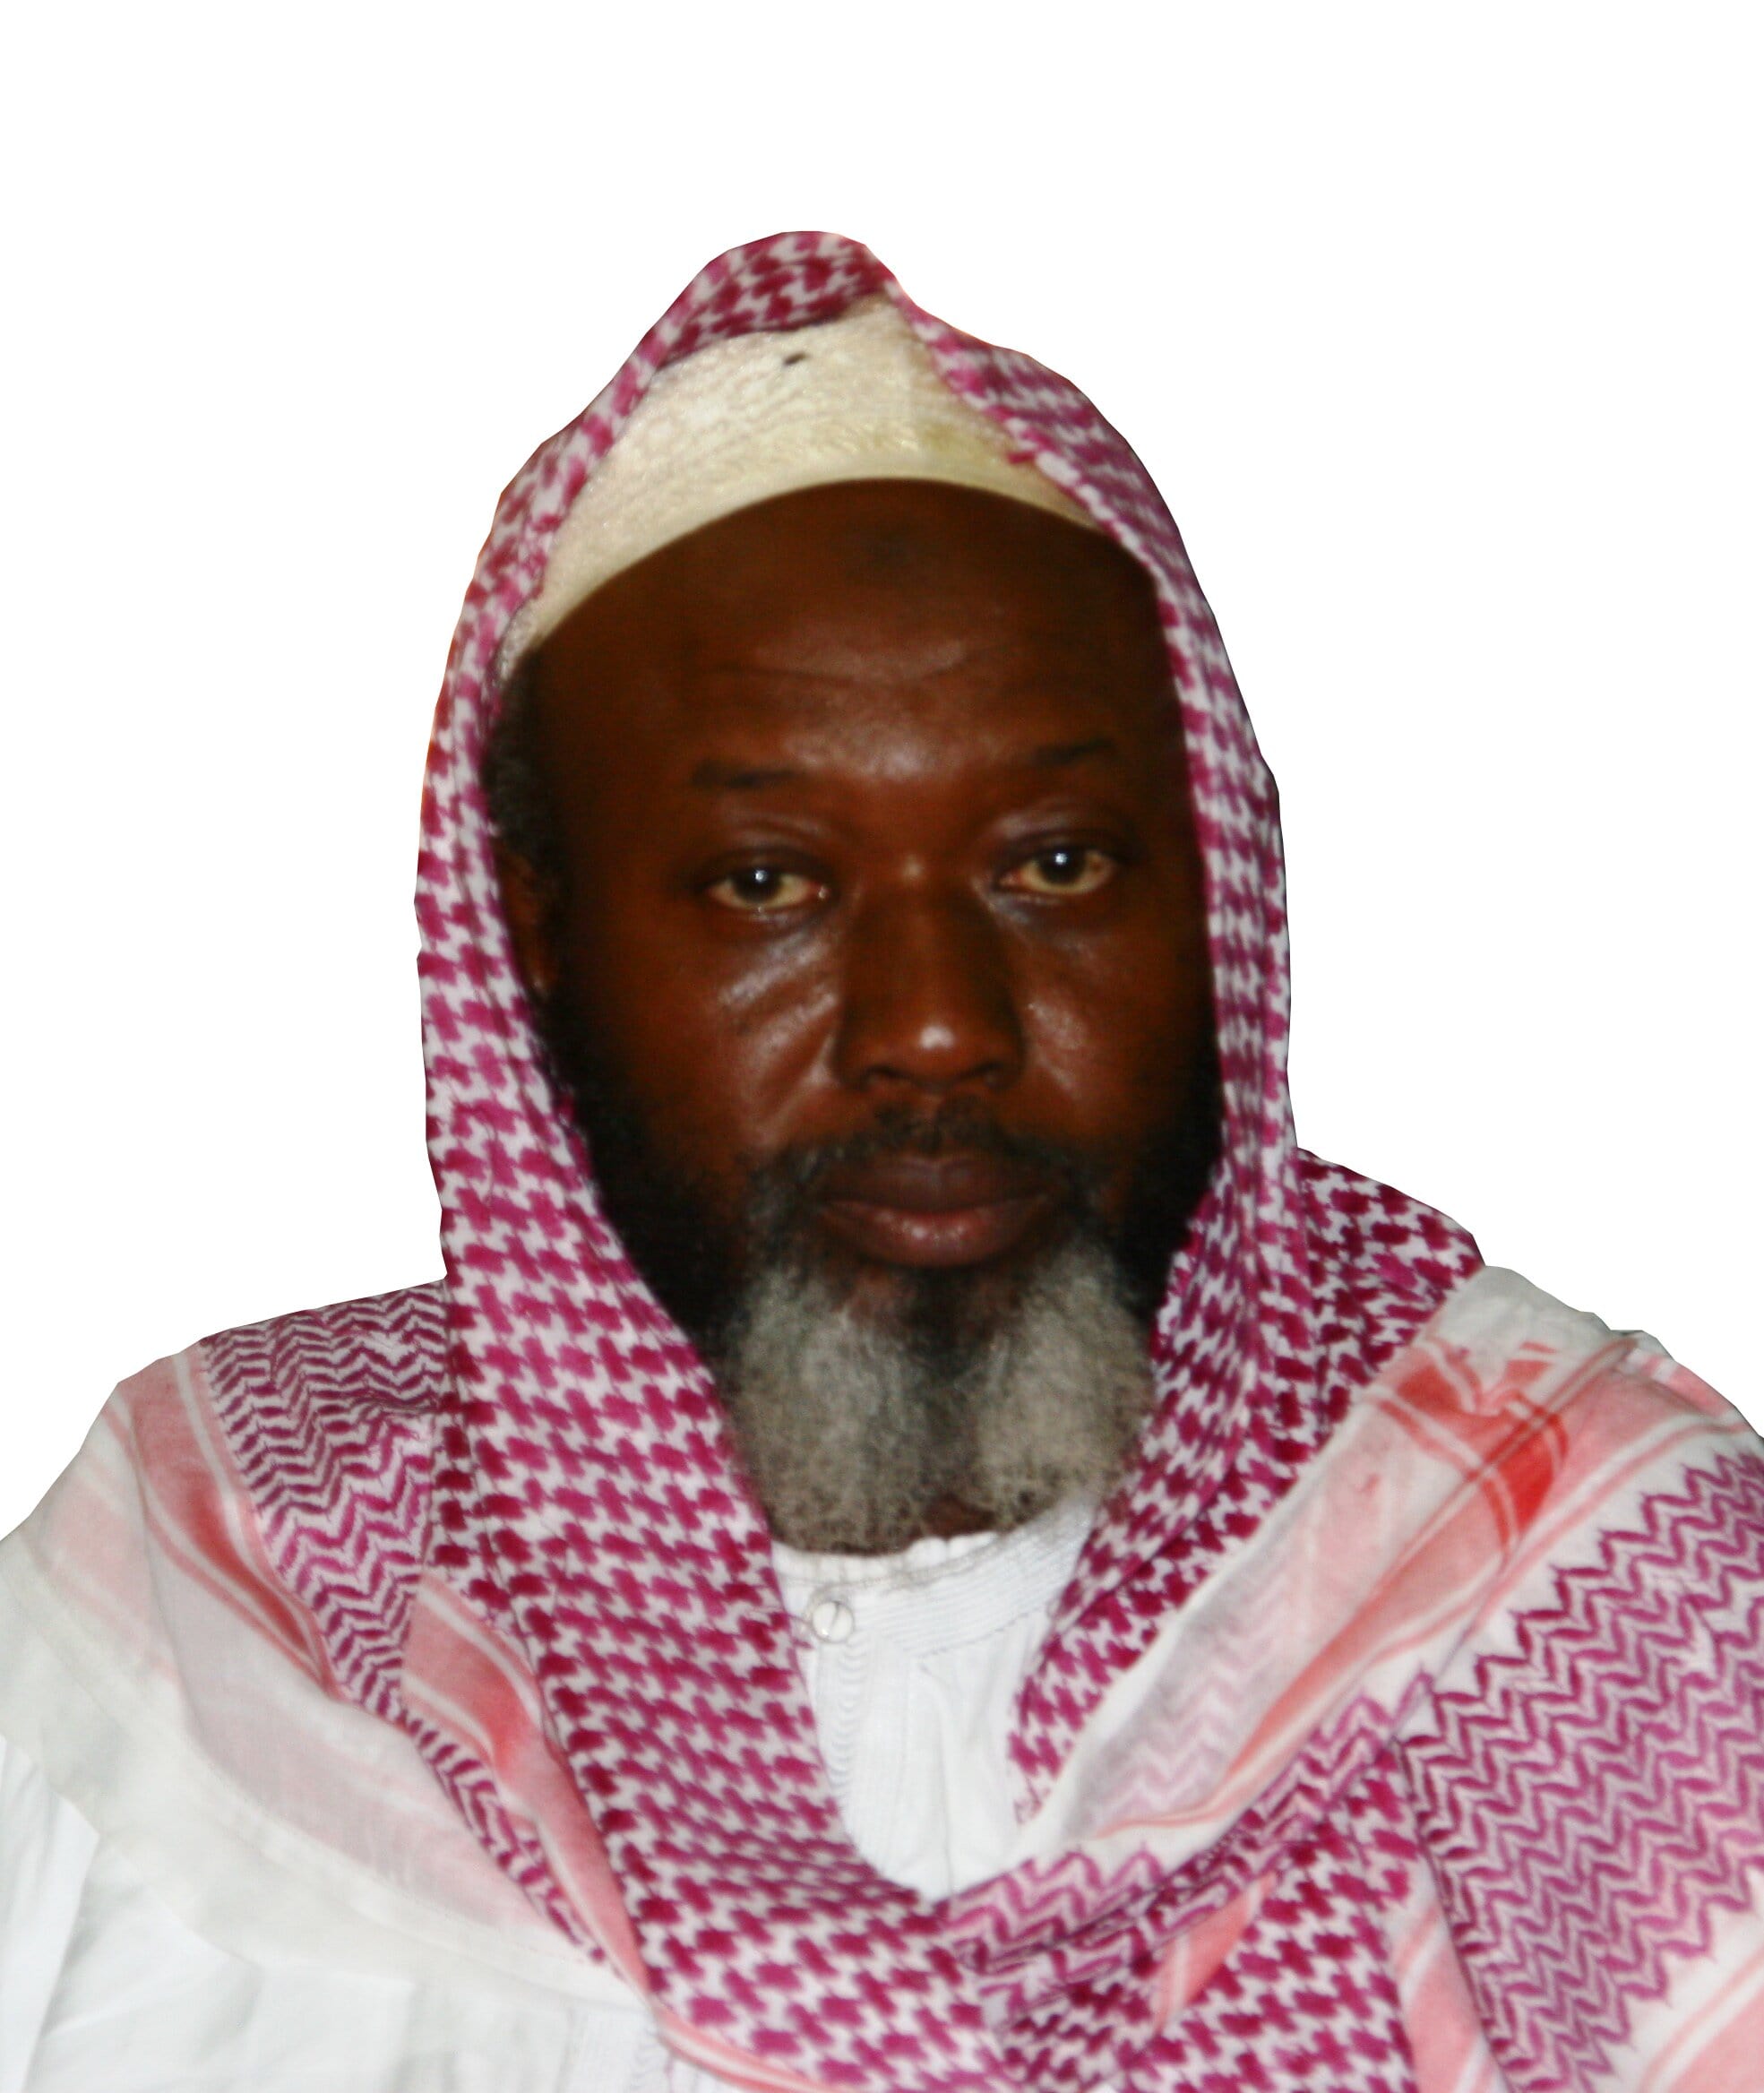 Imam Fatty reiterates stance on FGM